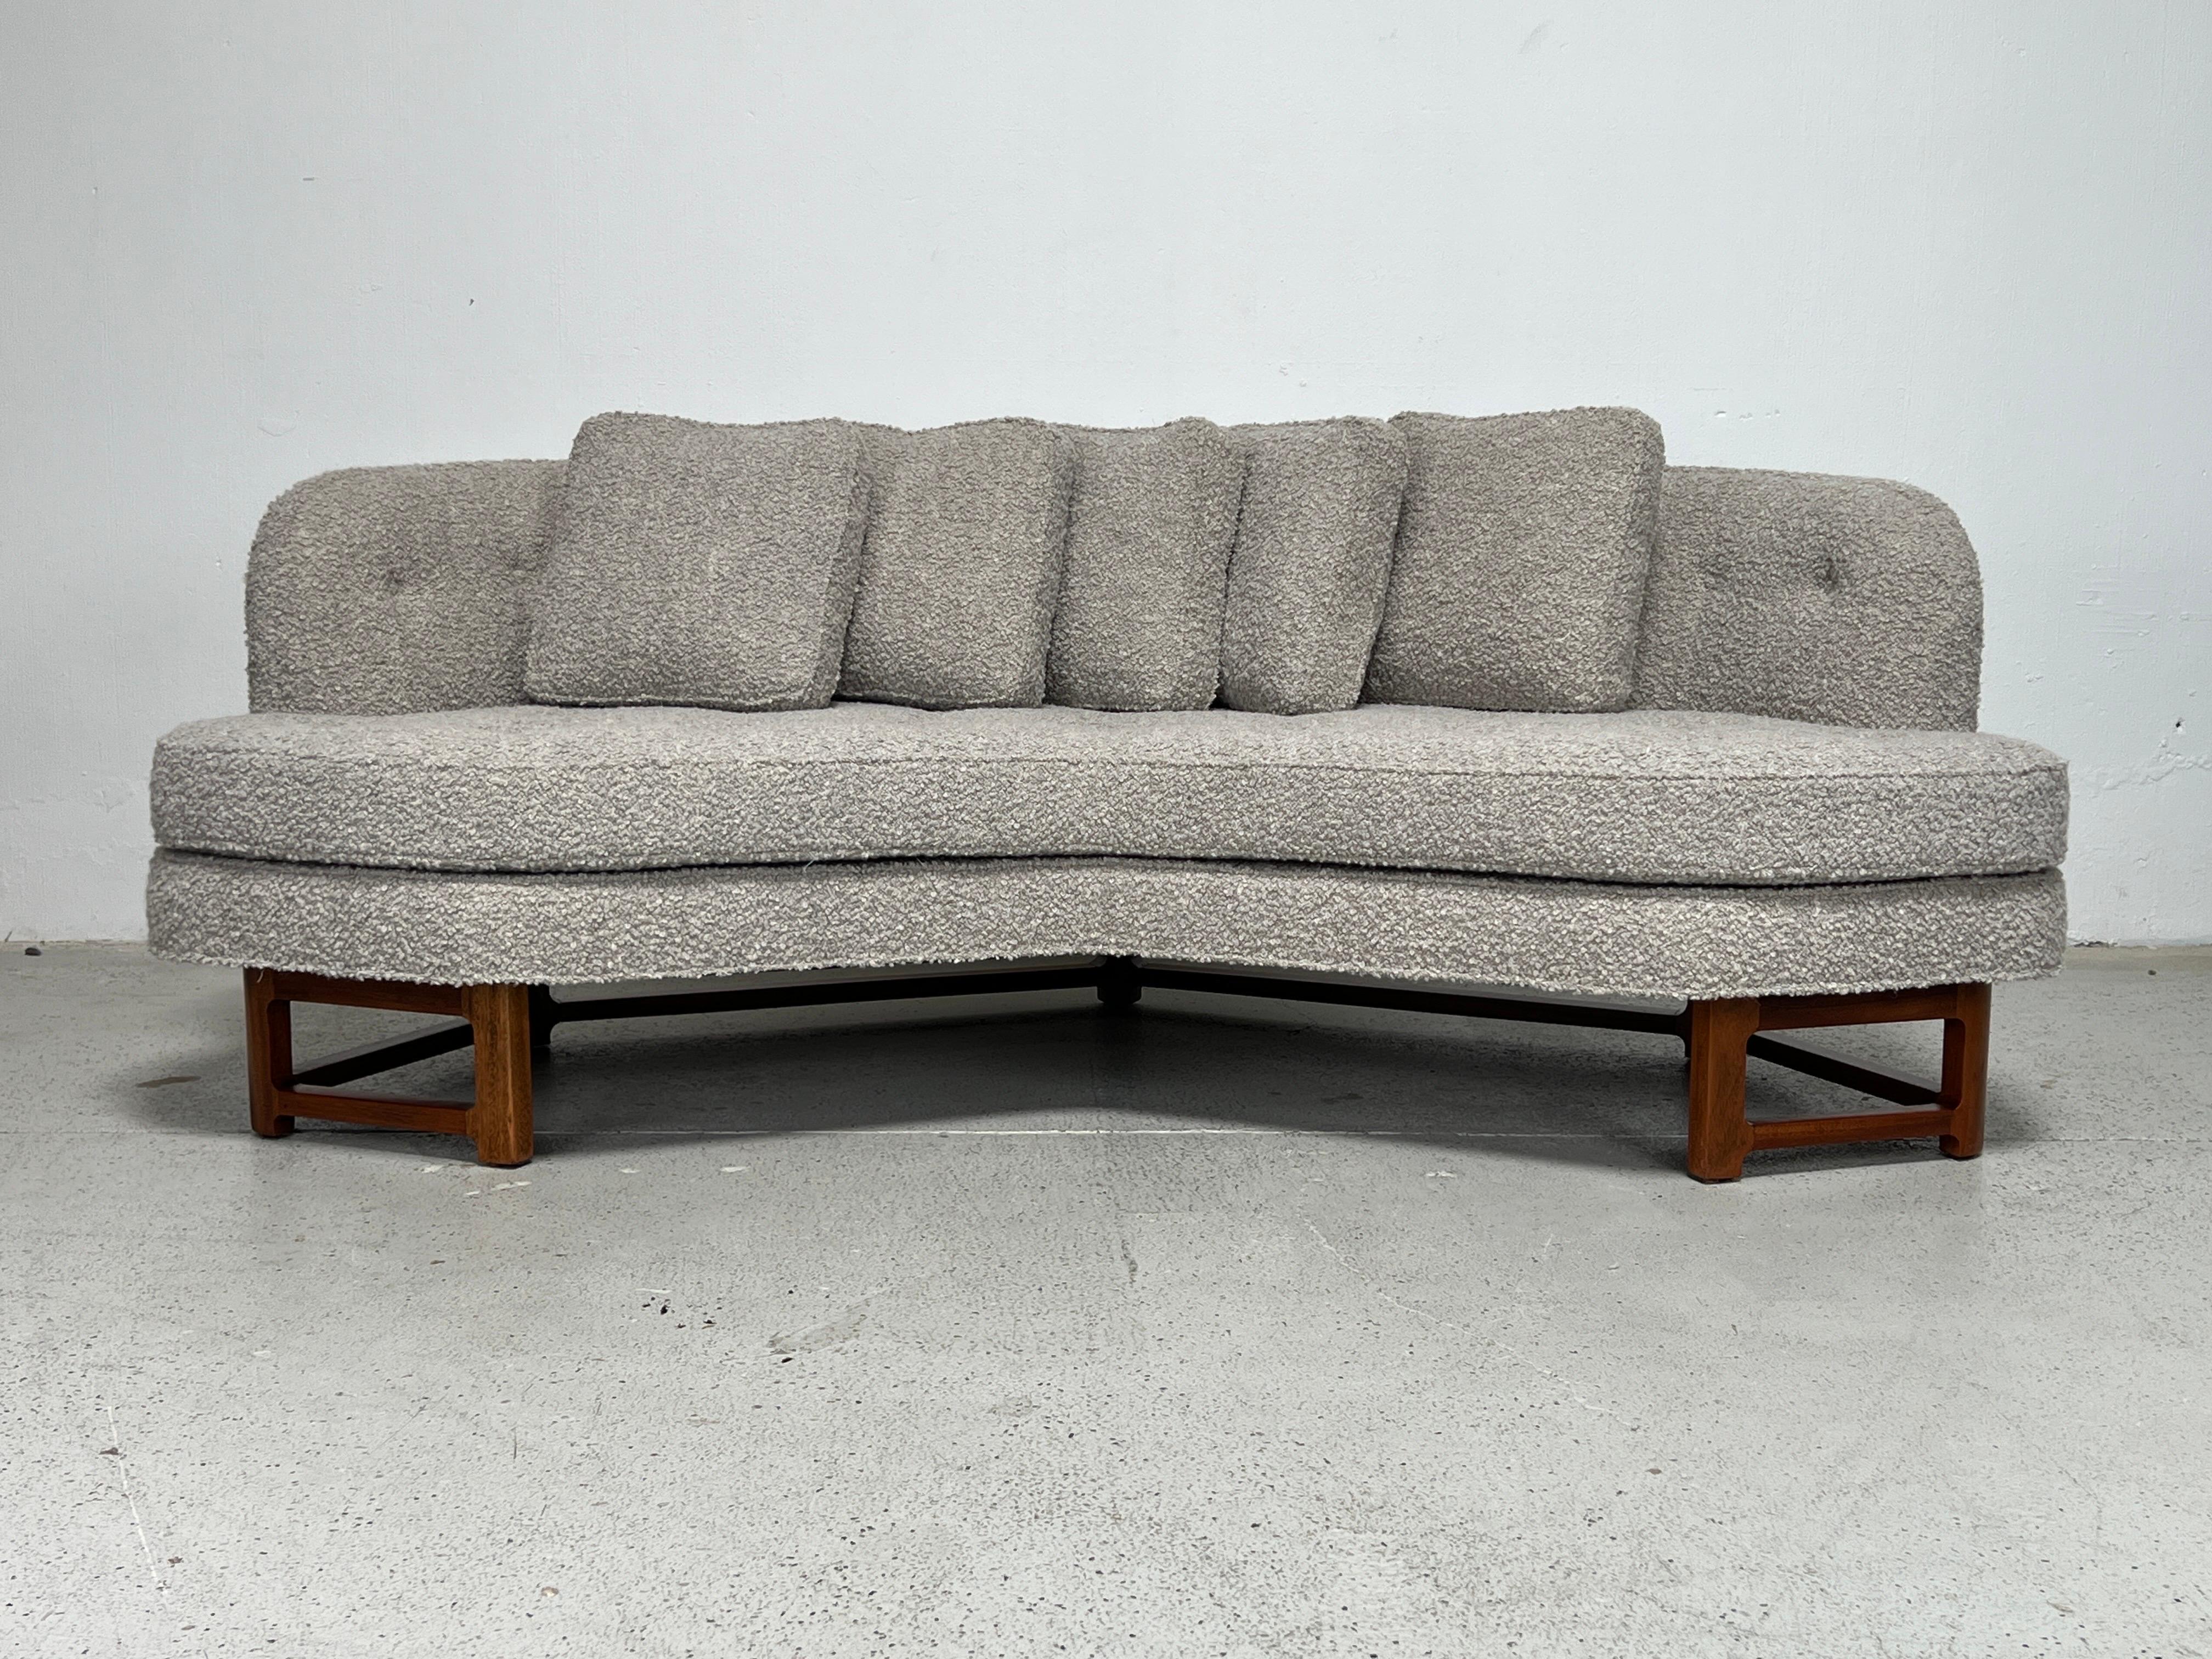  Angled Sofa by Edward Wormley for Dunbar 1